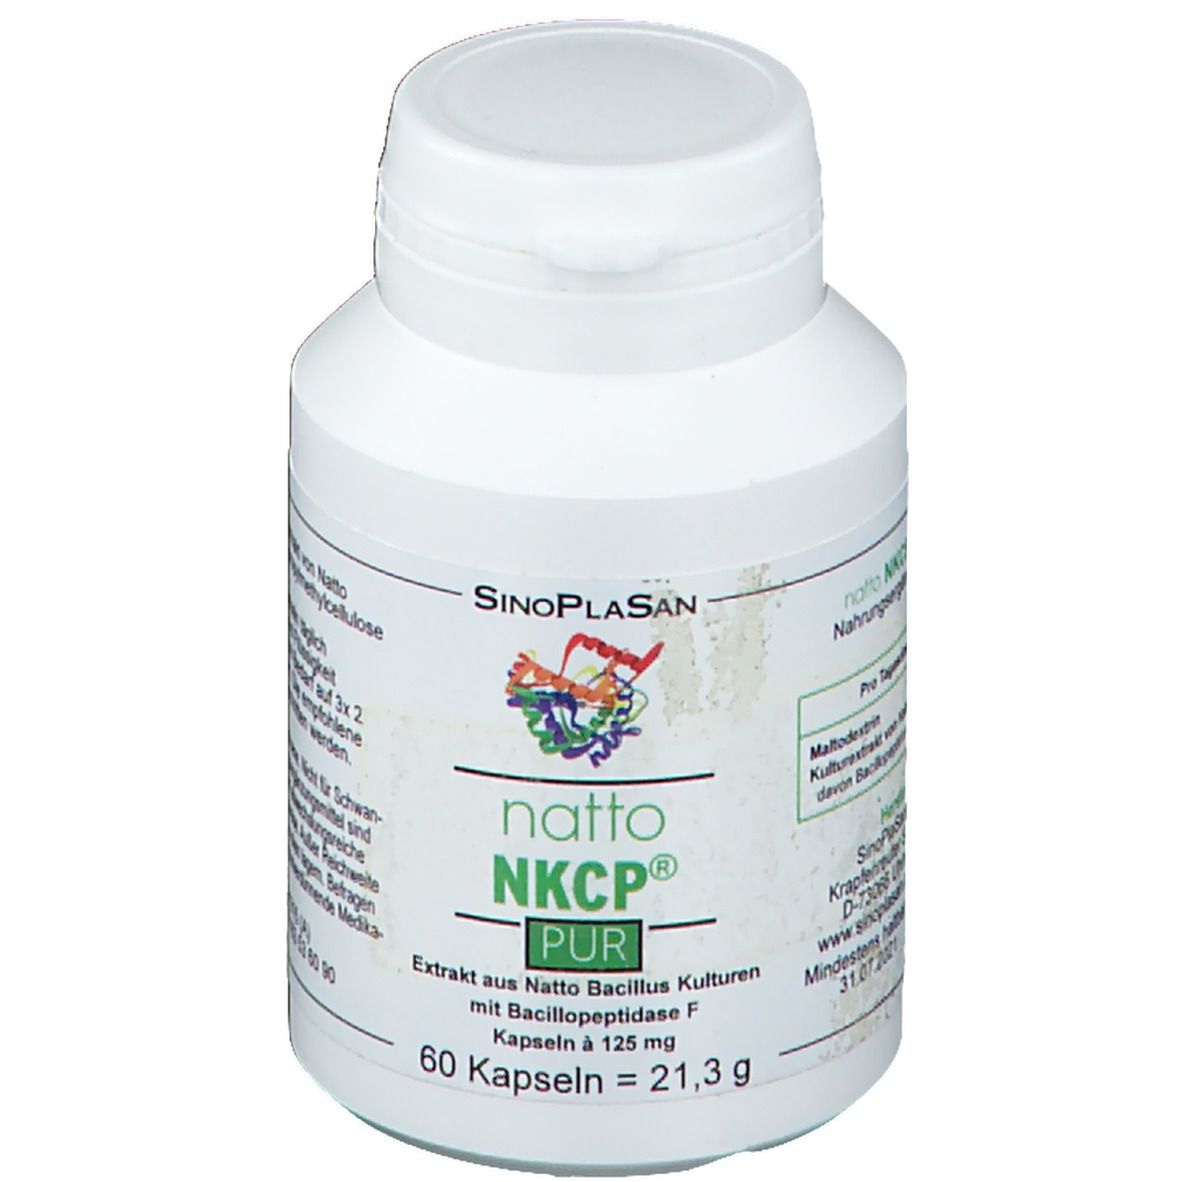 SinoPlaSan natto NKCP® PUR 125 mg